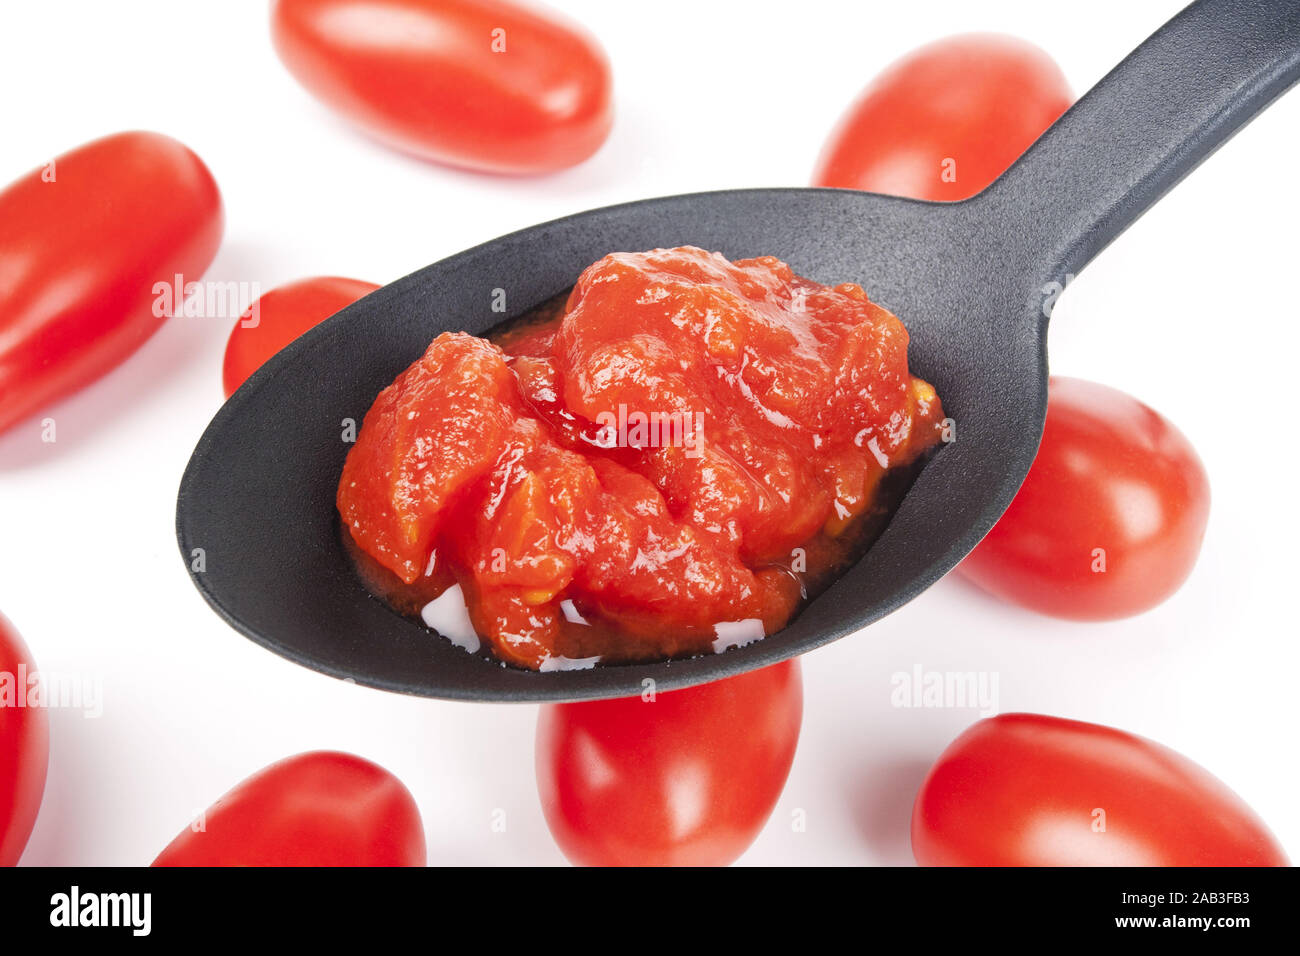 Passierte Tomaten auf einem Loeffel |Crushed tomatoes on a spoon| Stock Photo